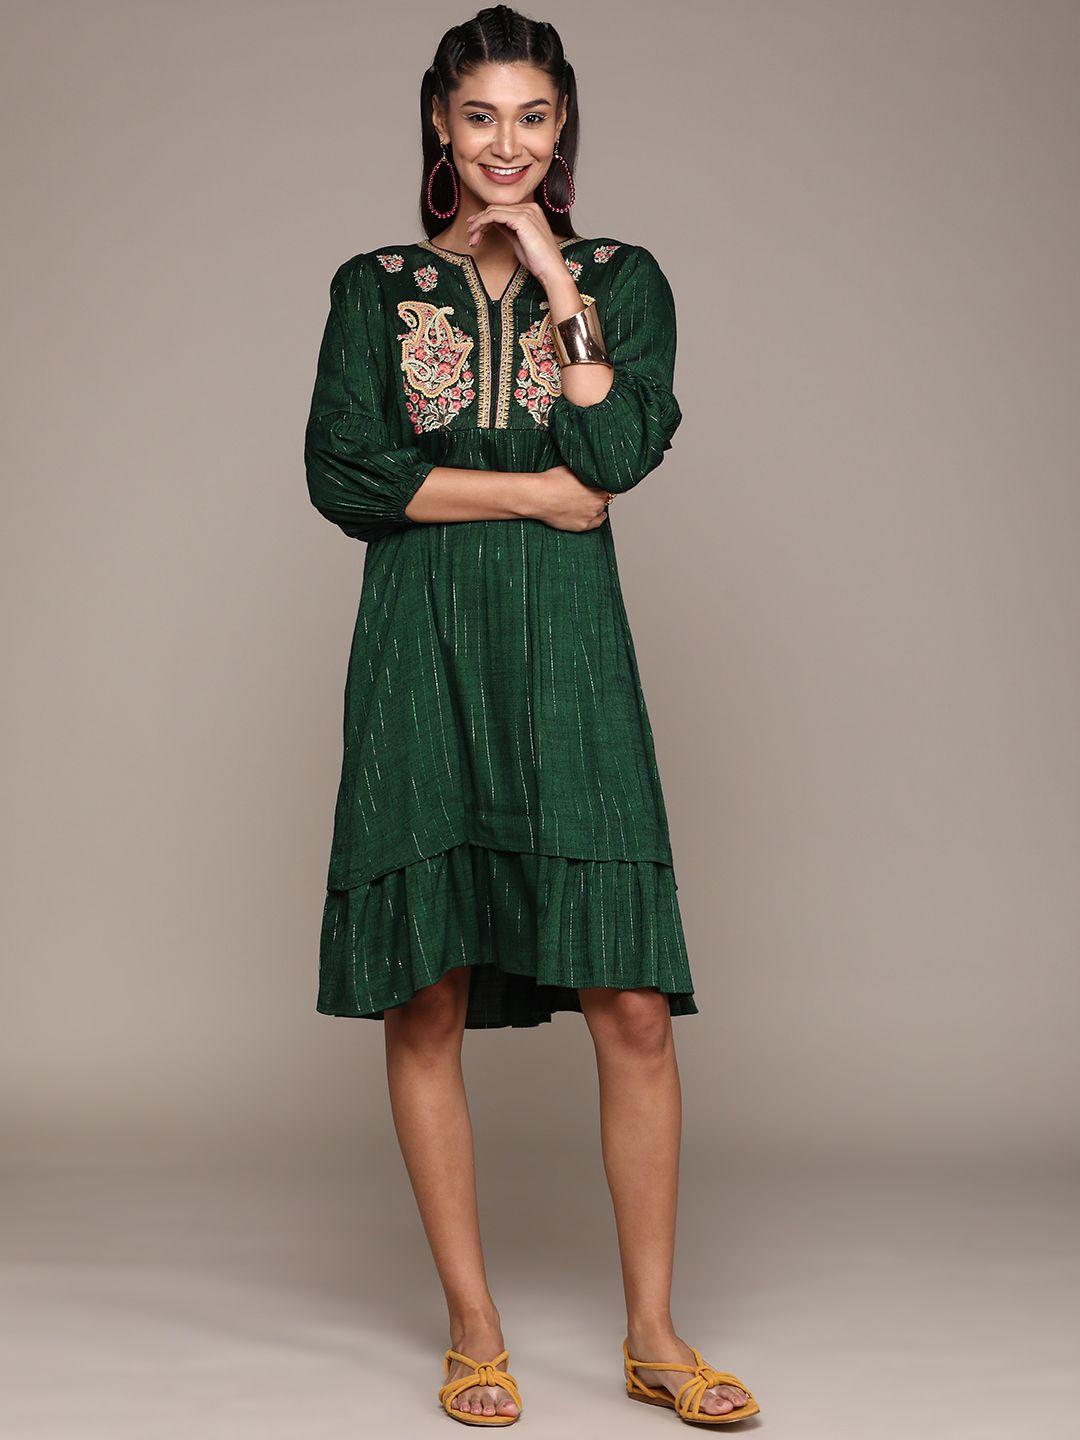 aarke-ritu-kumar-green-floral-embroidered-a-line-dress